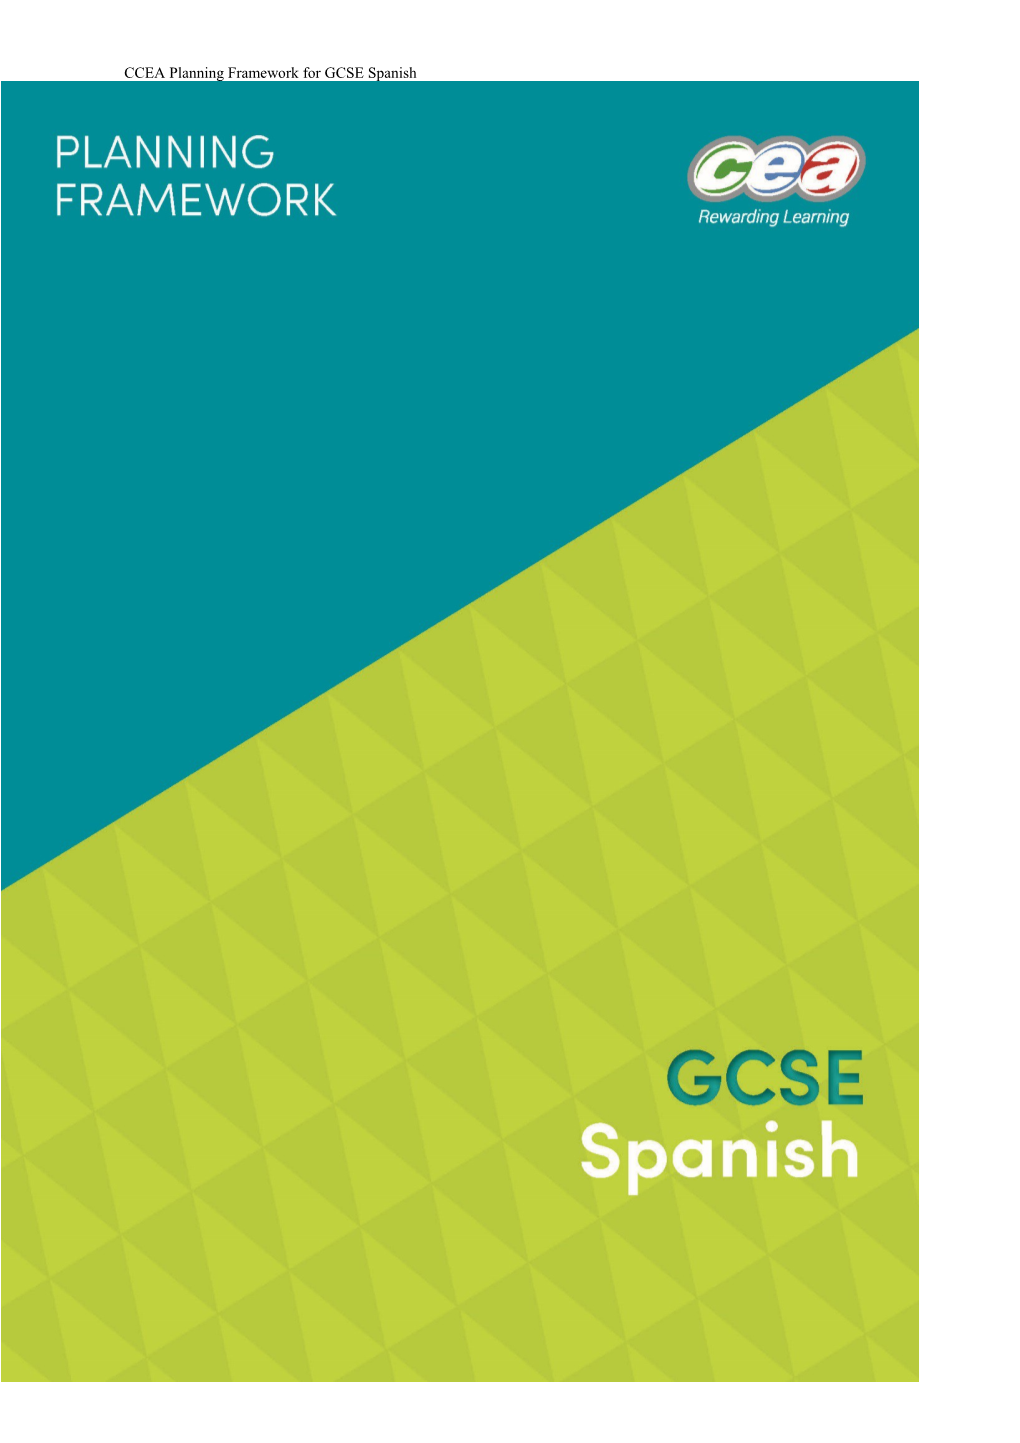 CCEA Planning Framework for GCSE Spanish